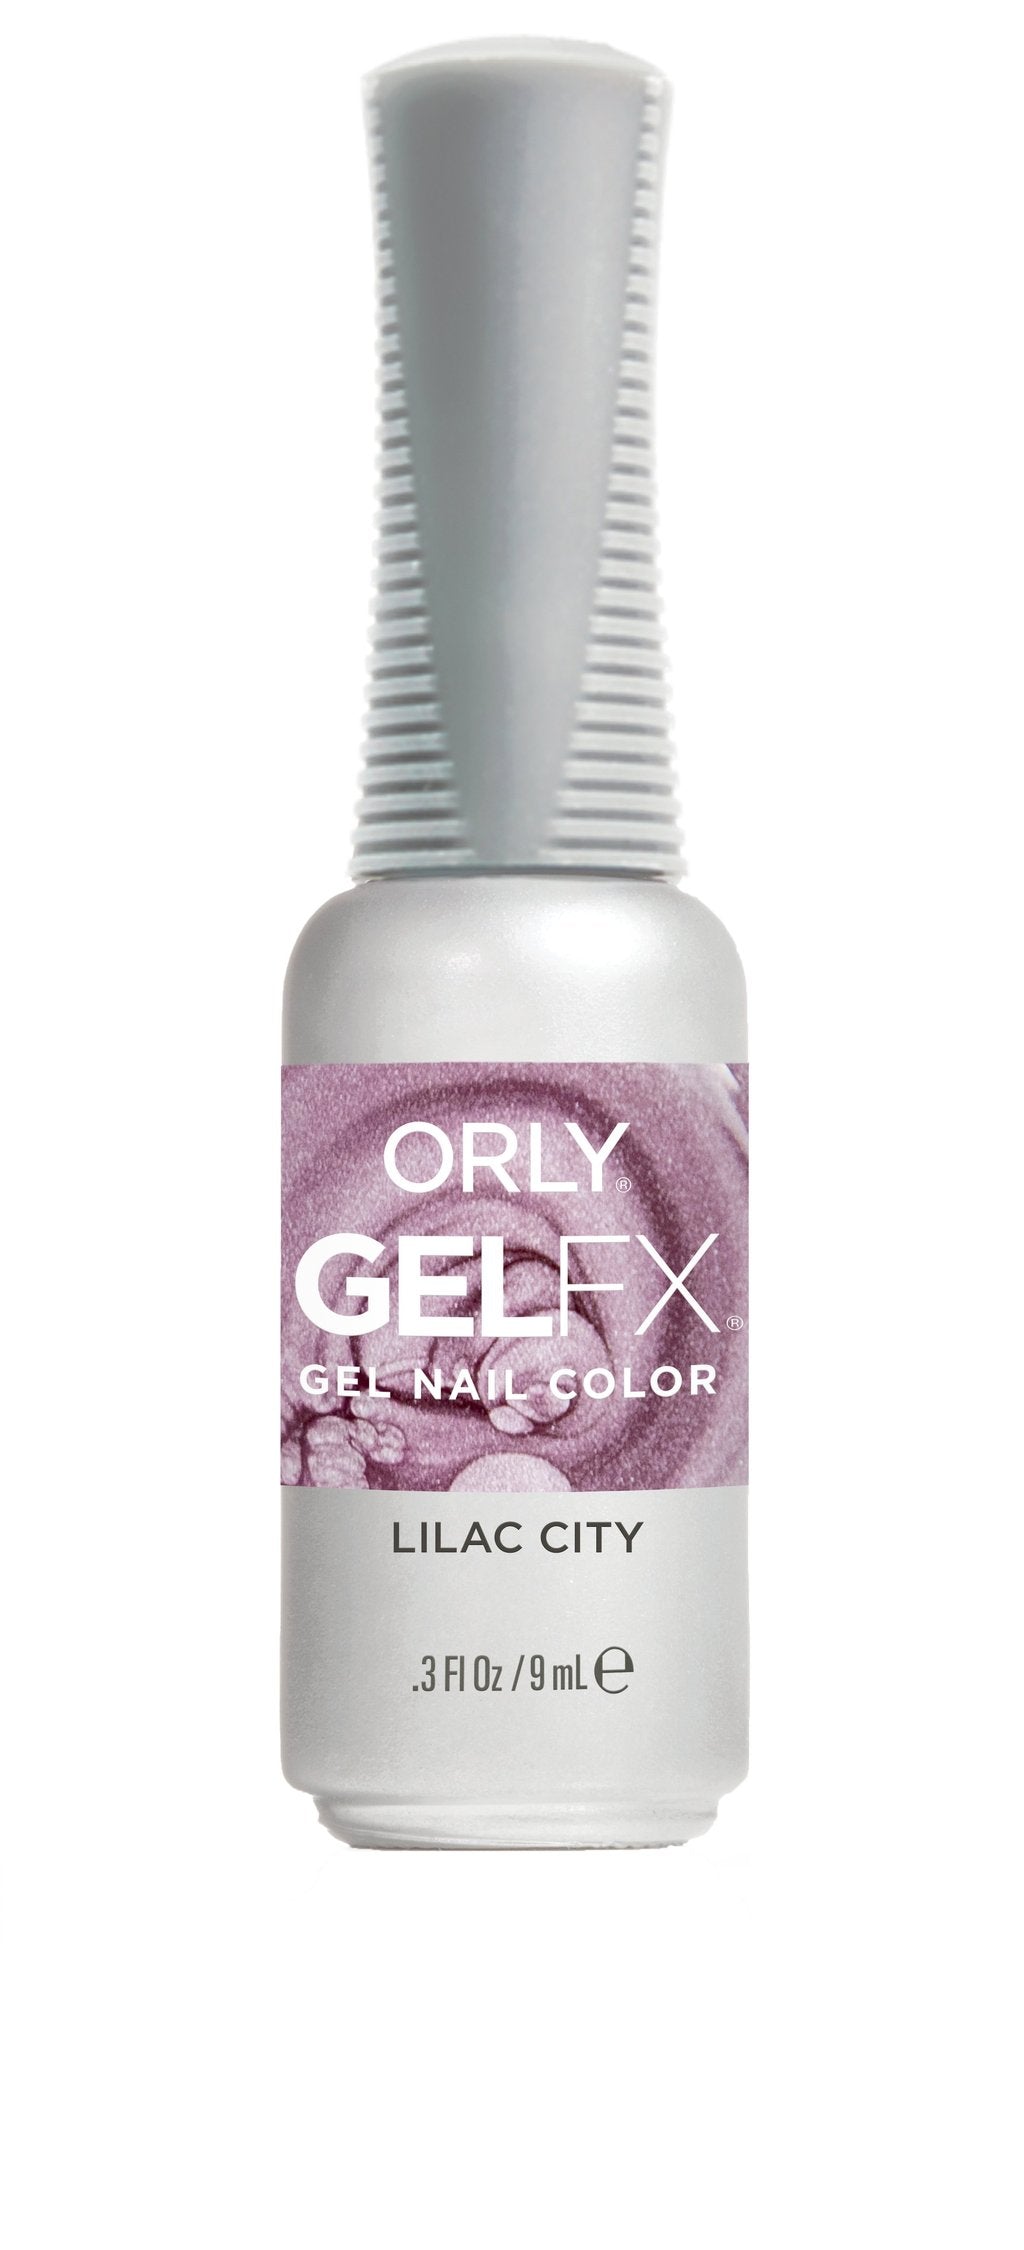 Orly GelFX Lilac City .3 fl oz 30970